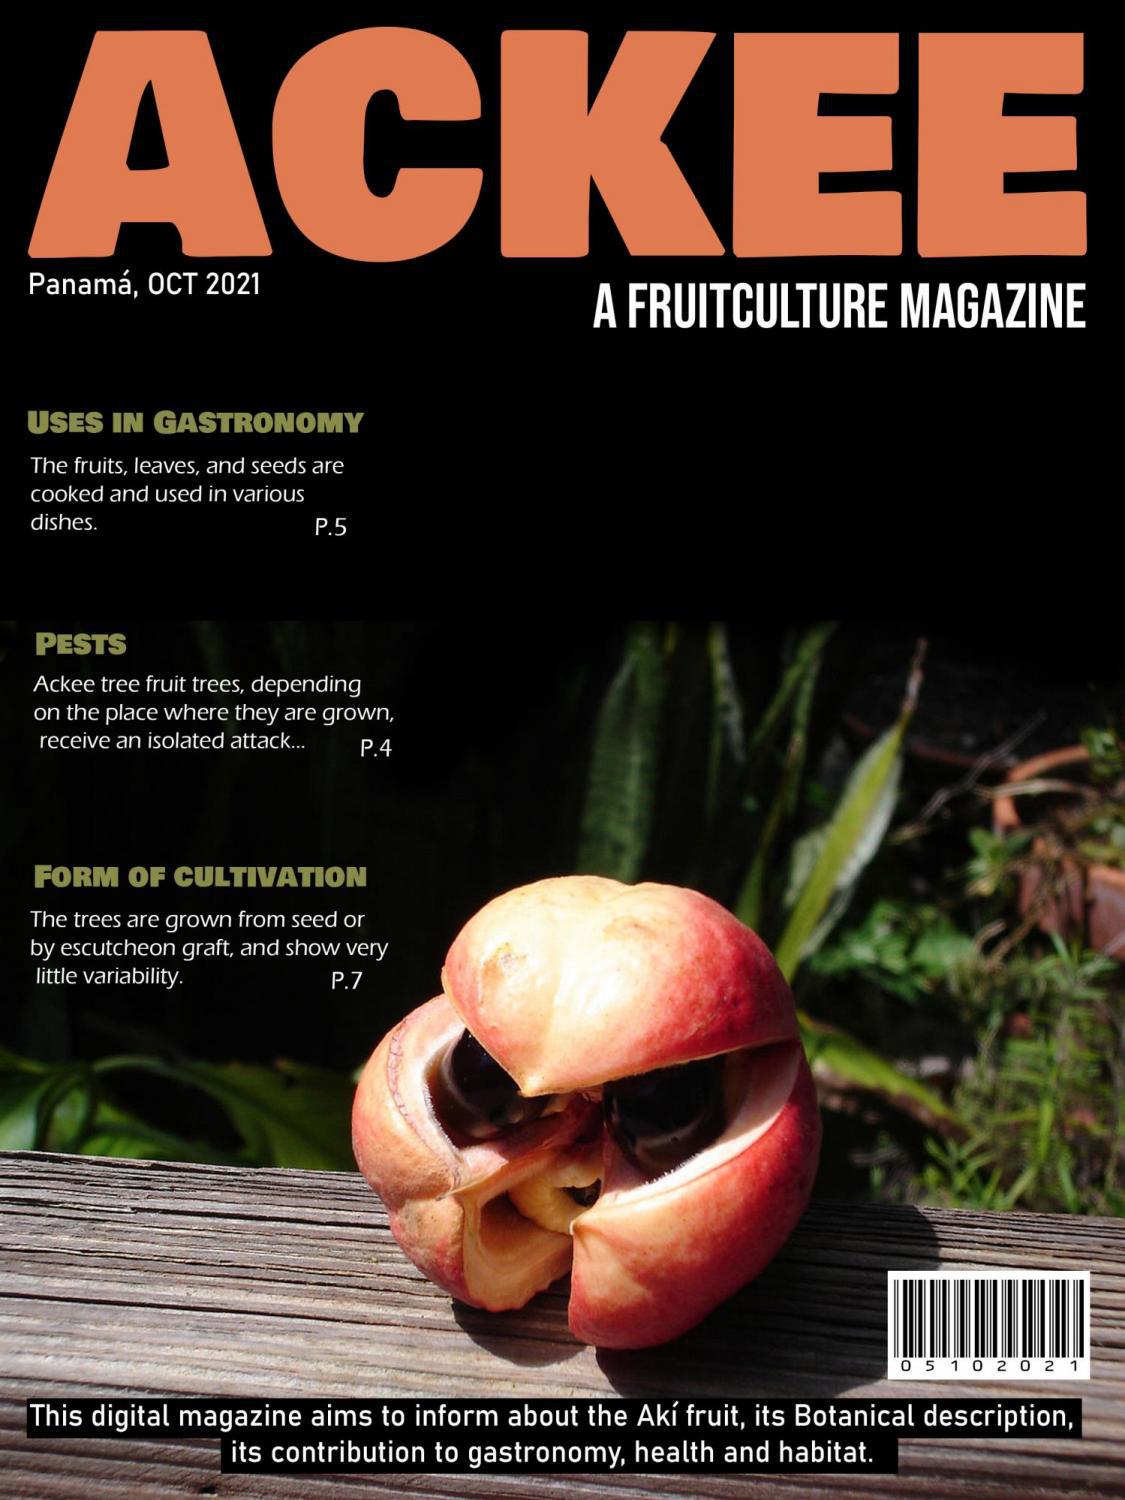   ACKEE A Fruitculture magazine